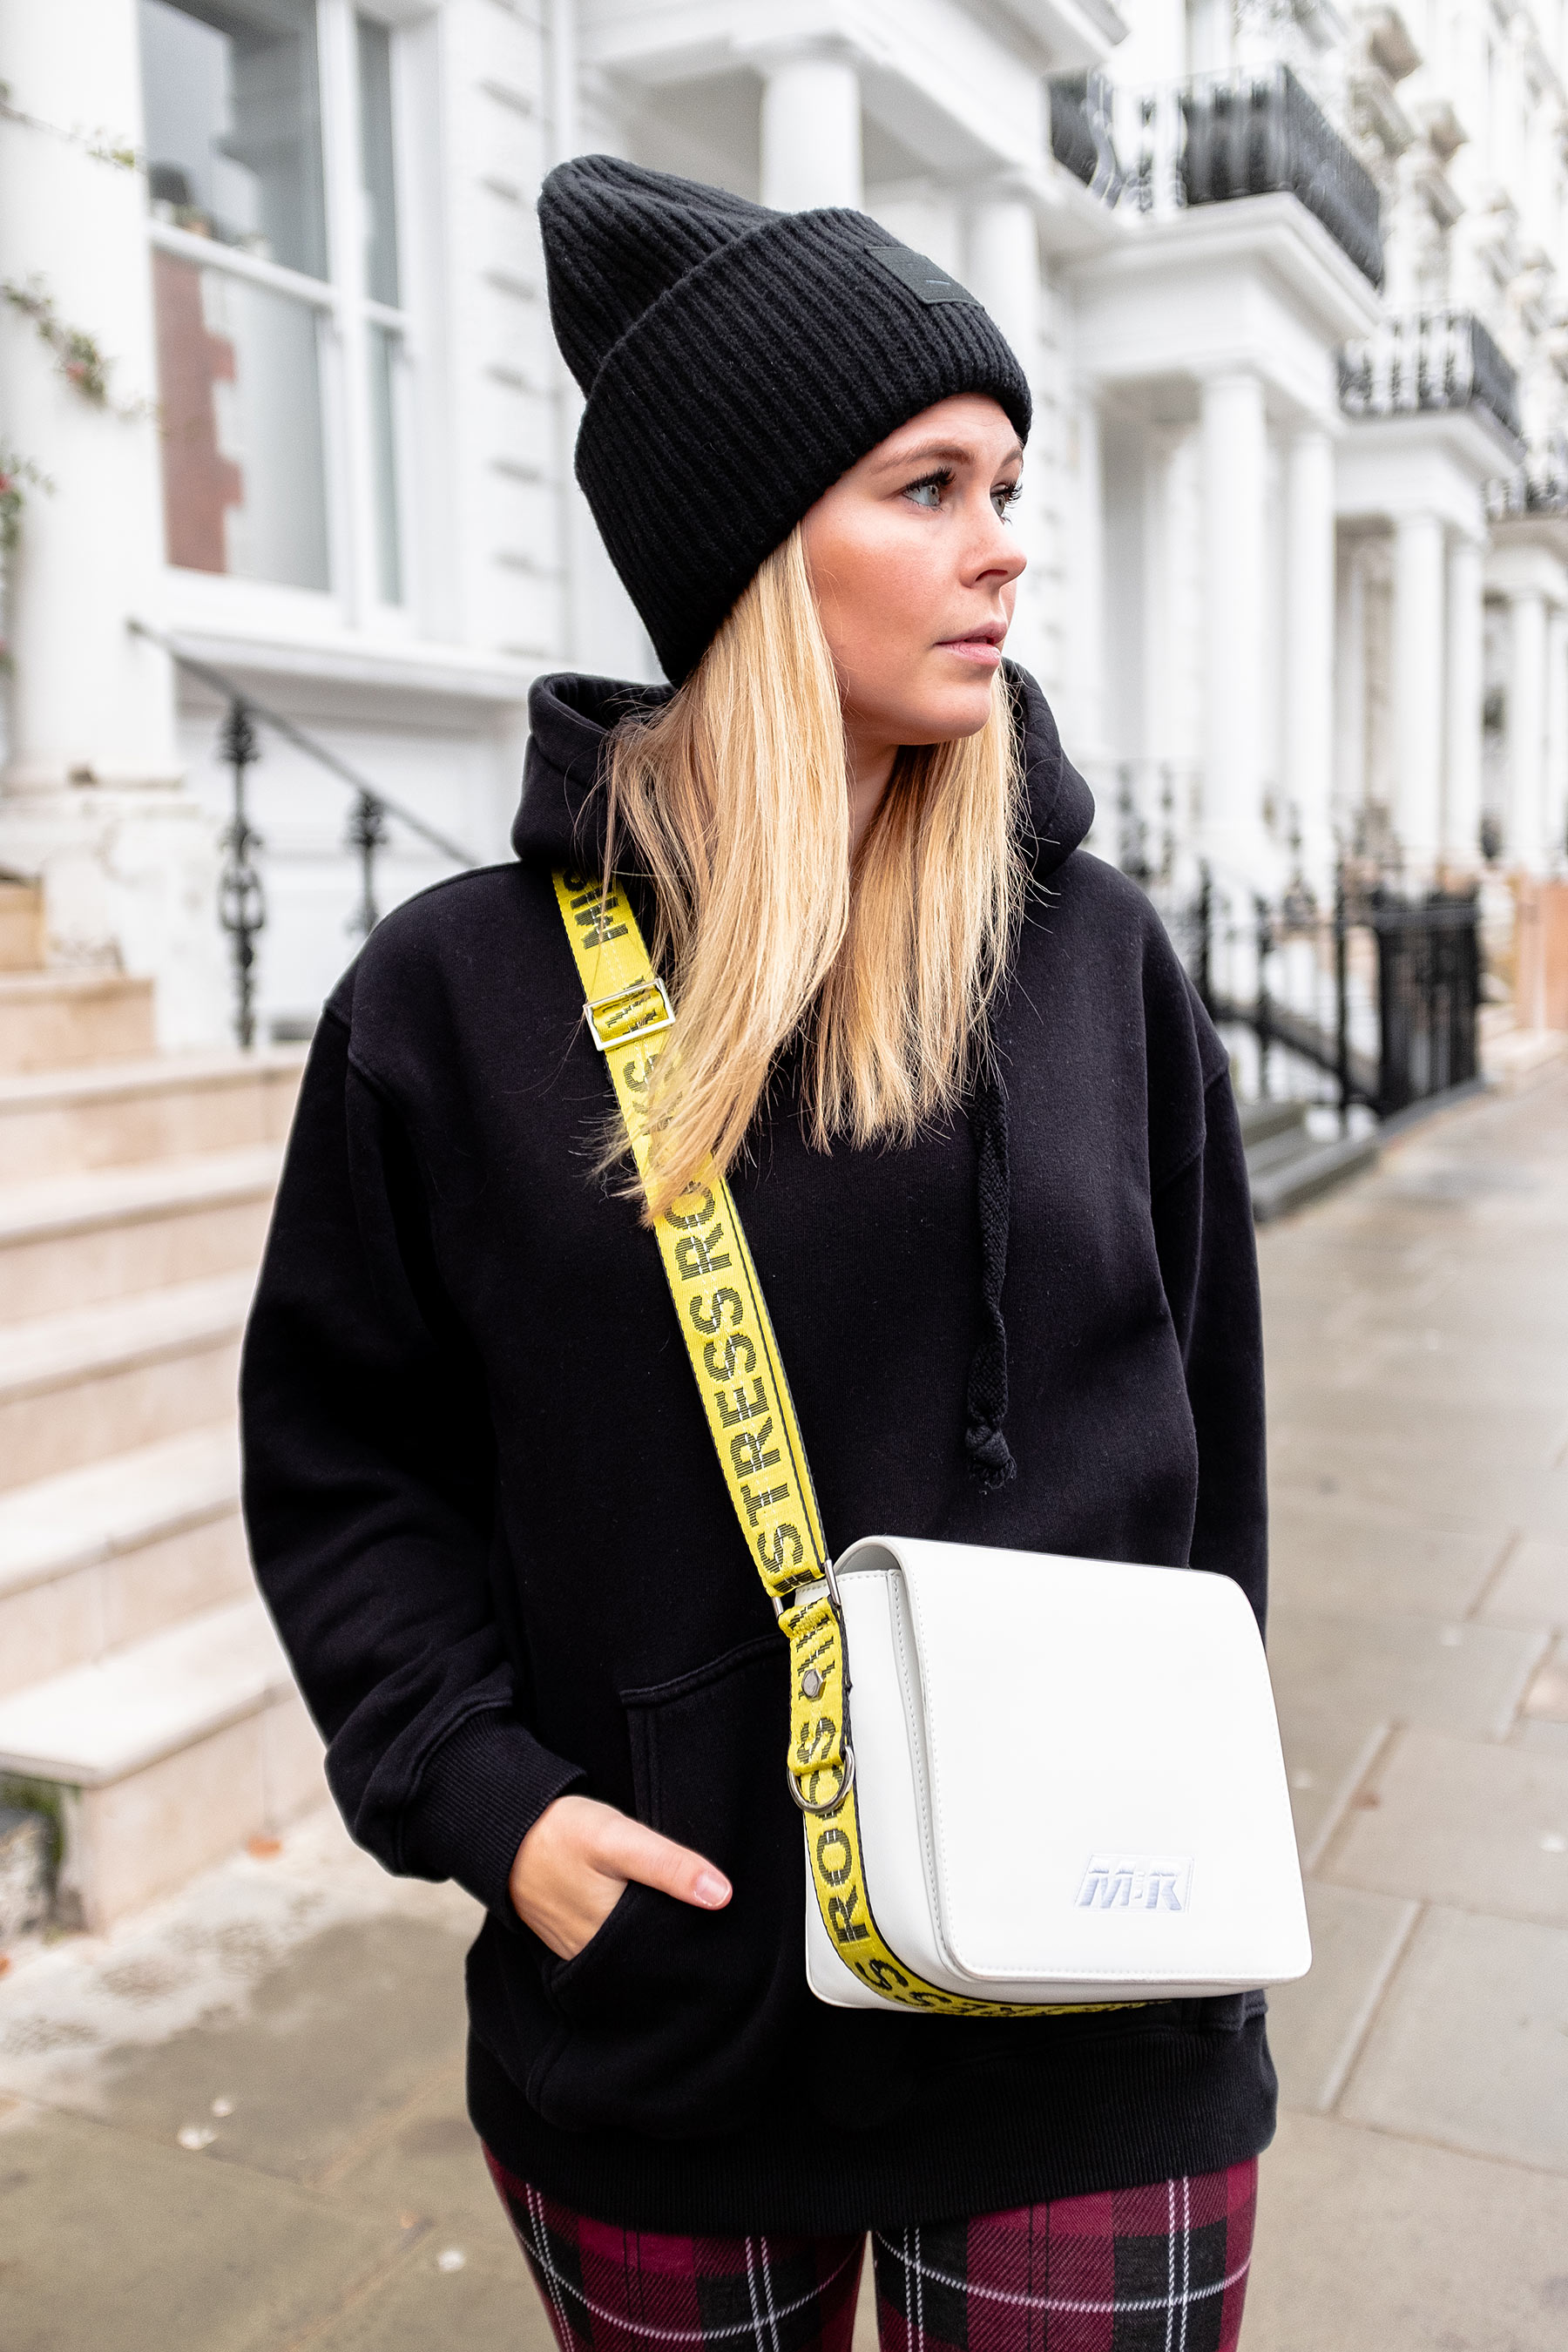 misstress rocks weisse tasche london fashion blogger sunnyinga